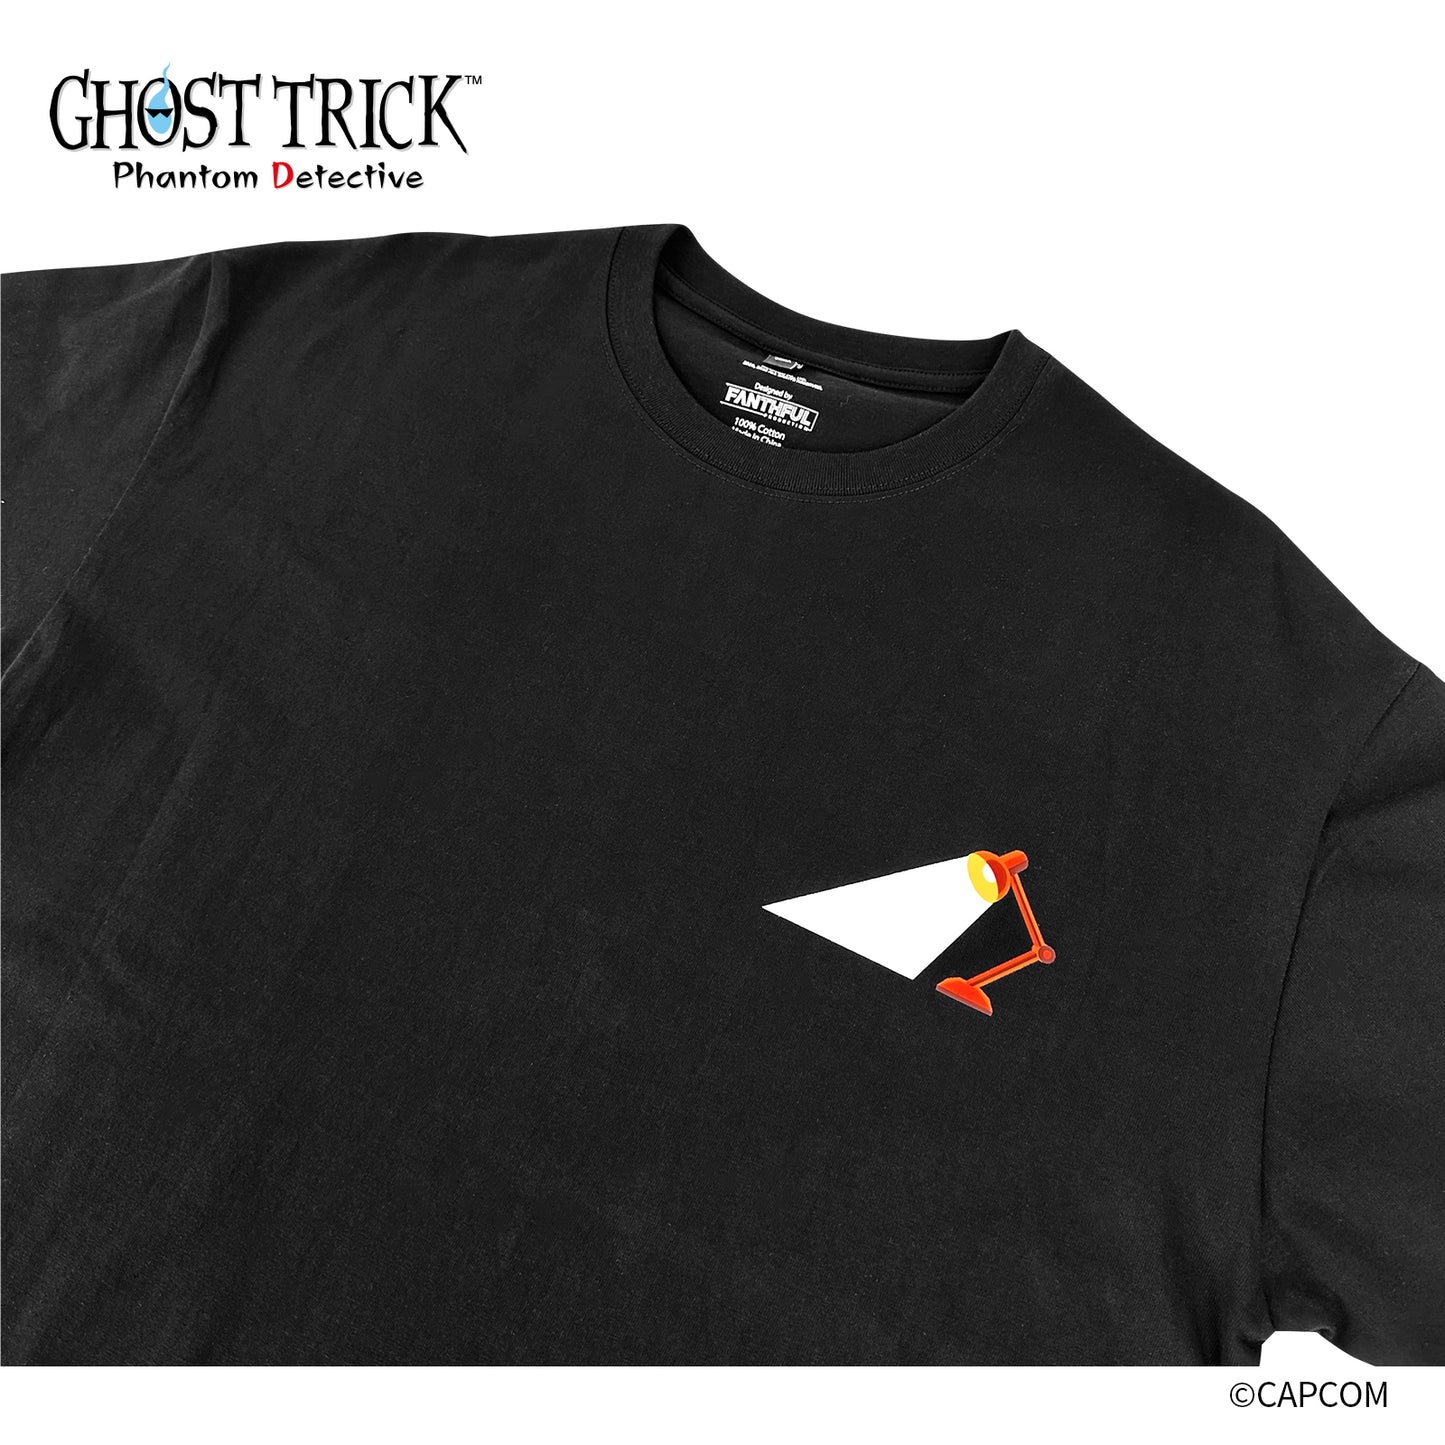 Ghost Trick Black T-shirt